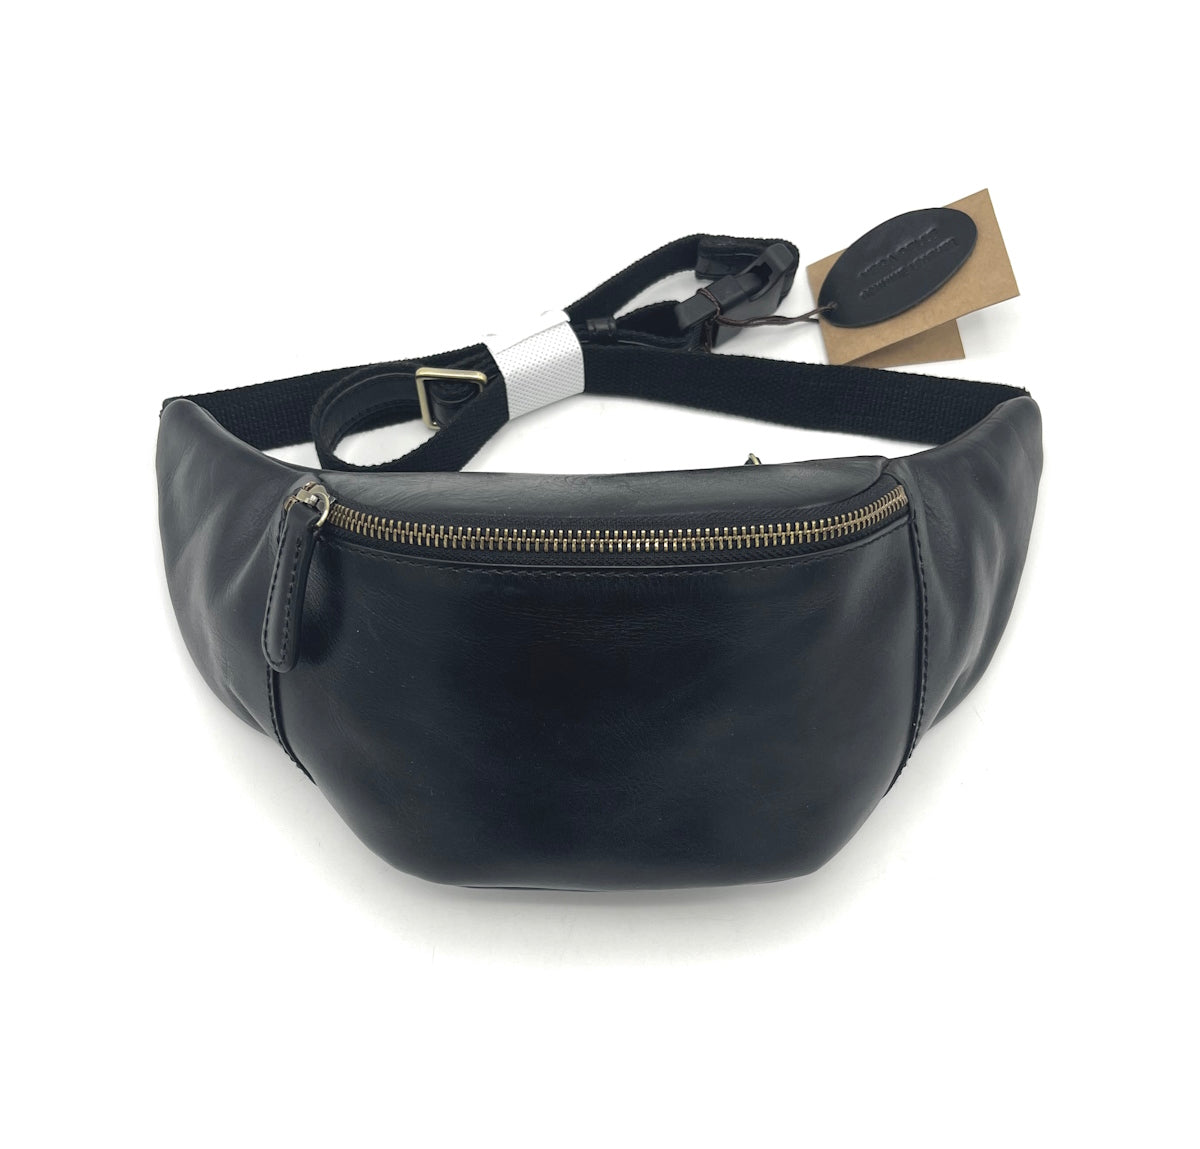 Buffered leather waist bag, for men, art. TA4803